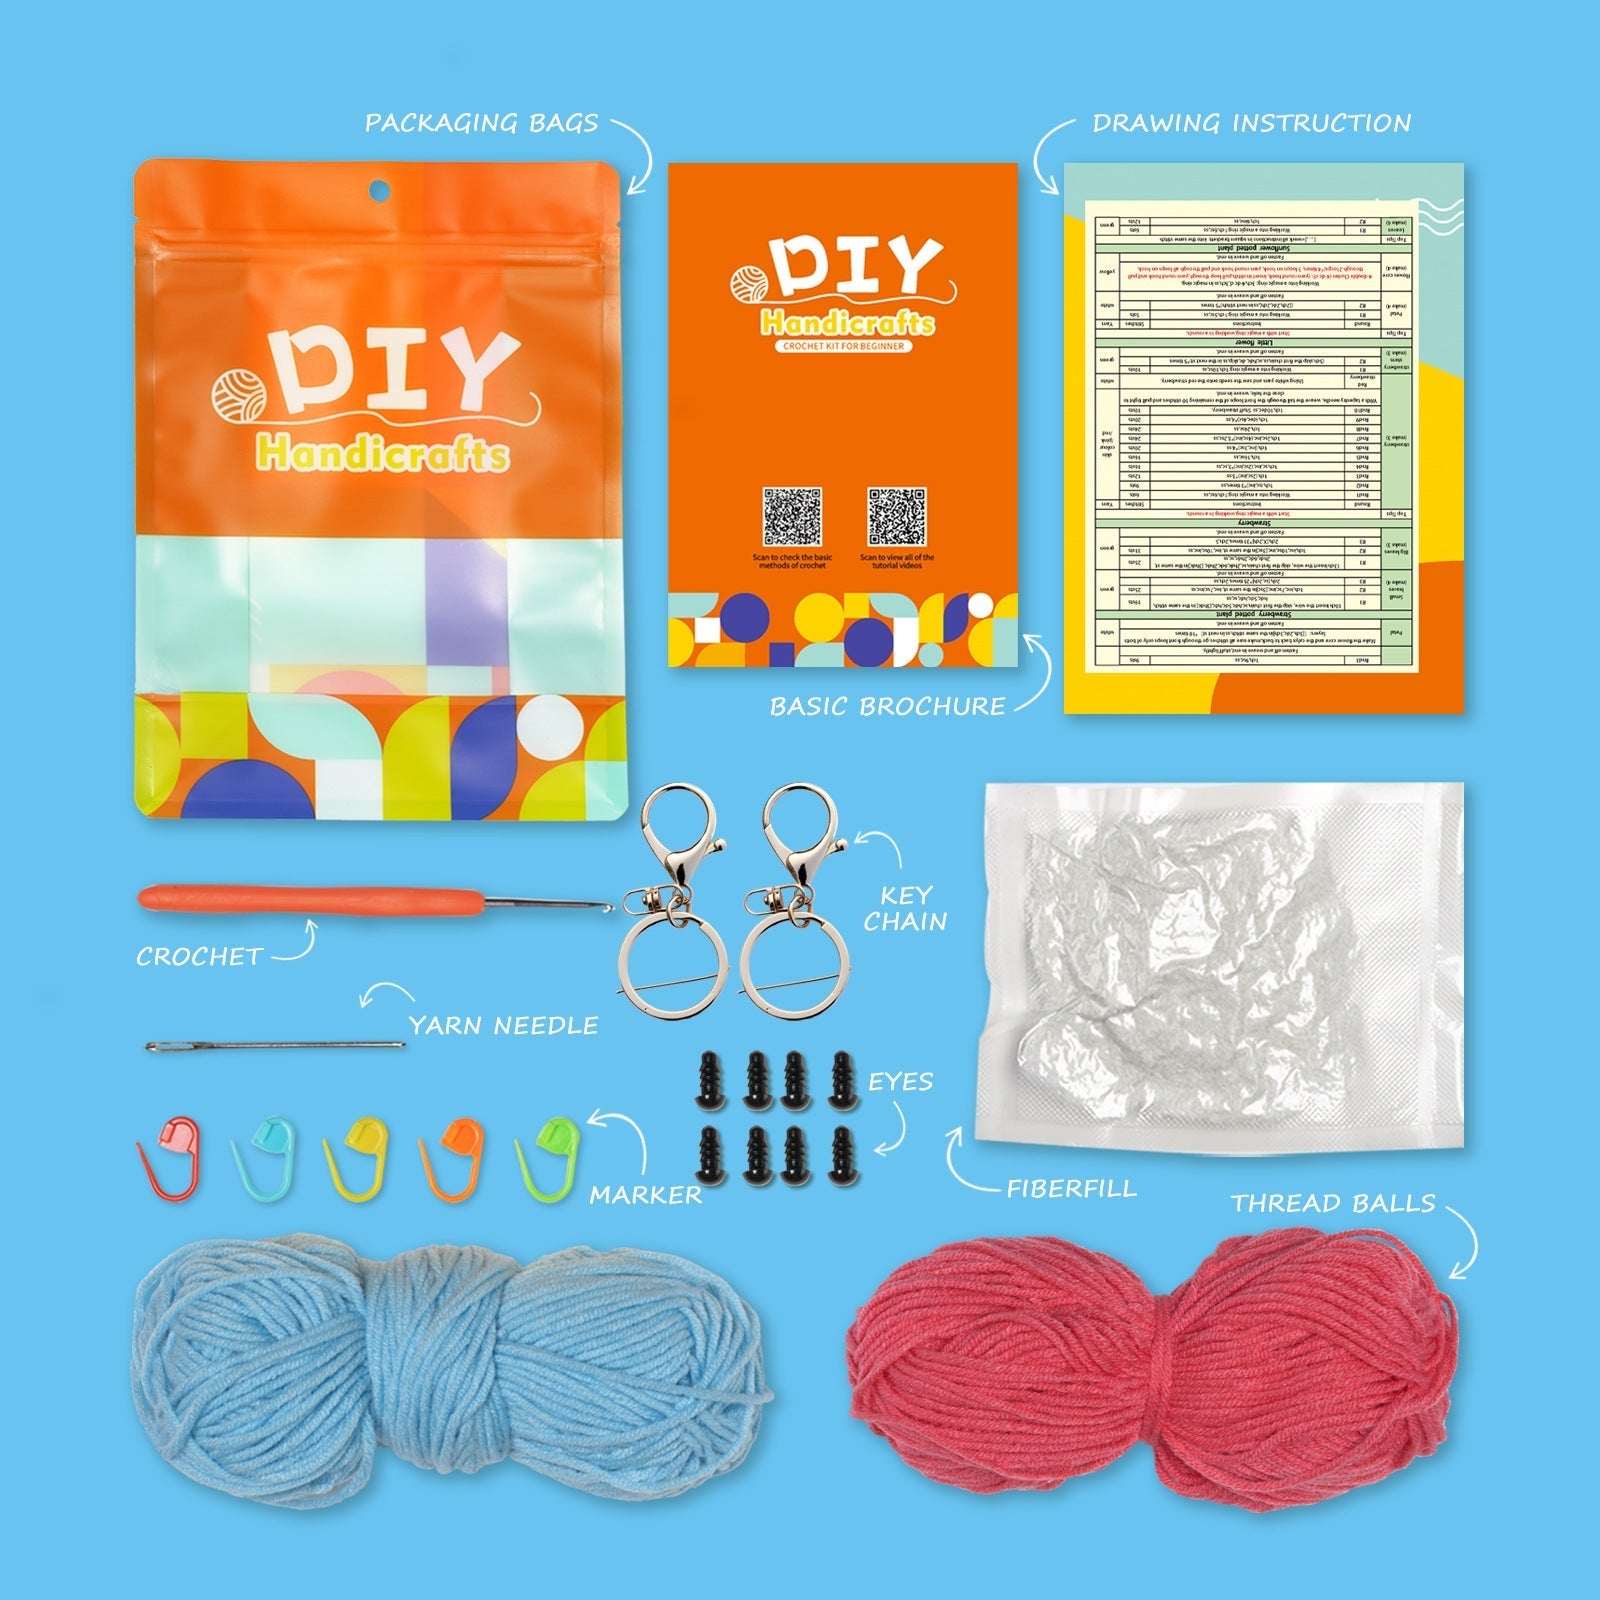 Mewaii® Crochet Hedgehog Crochet Kit for Beginners with Easy Peasy Yarn